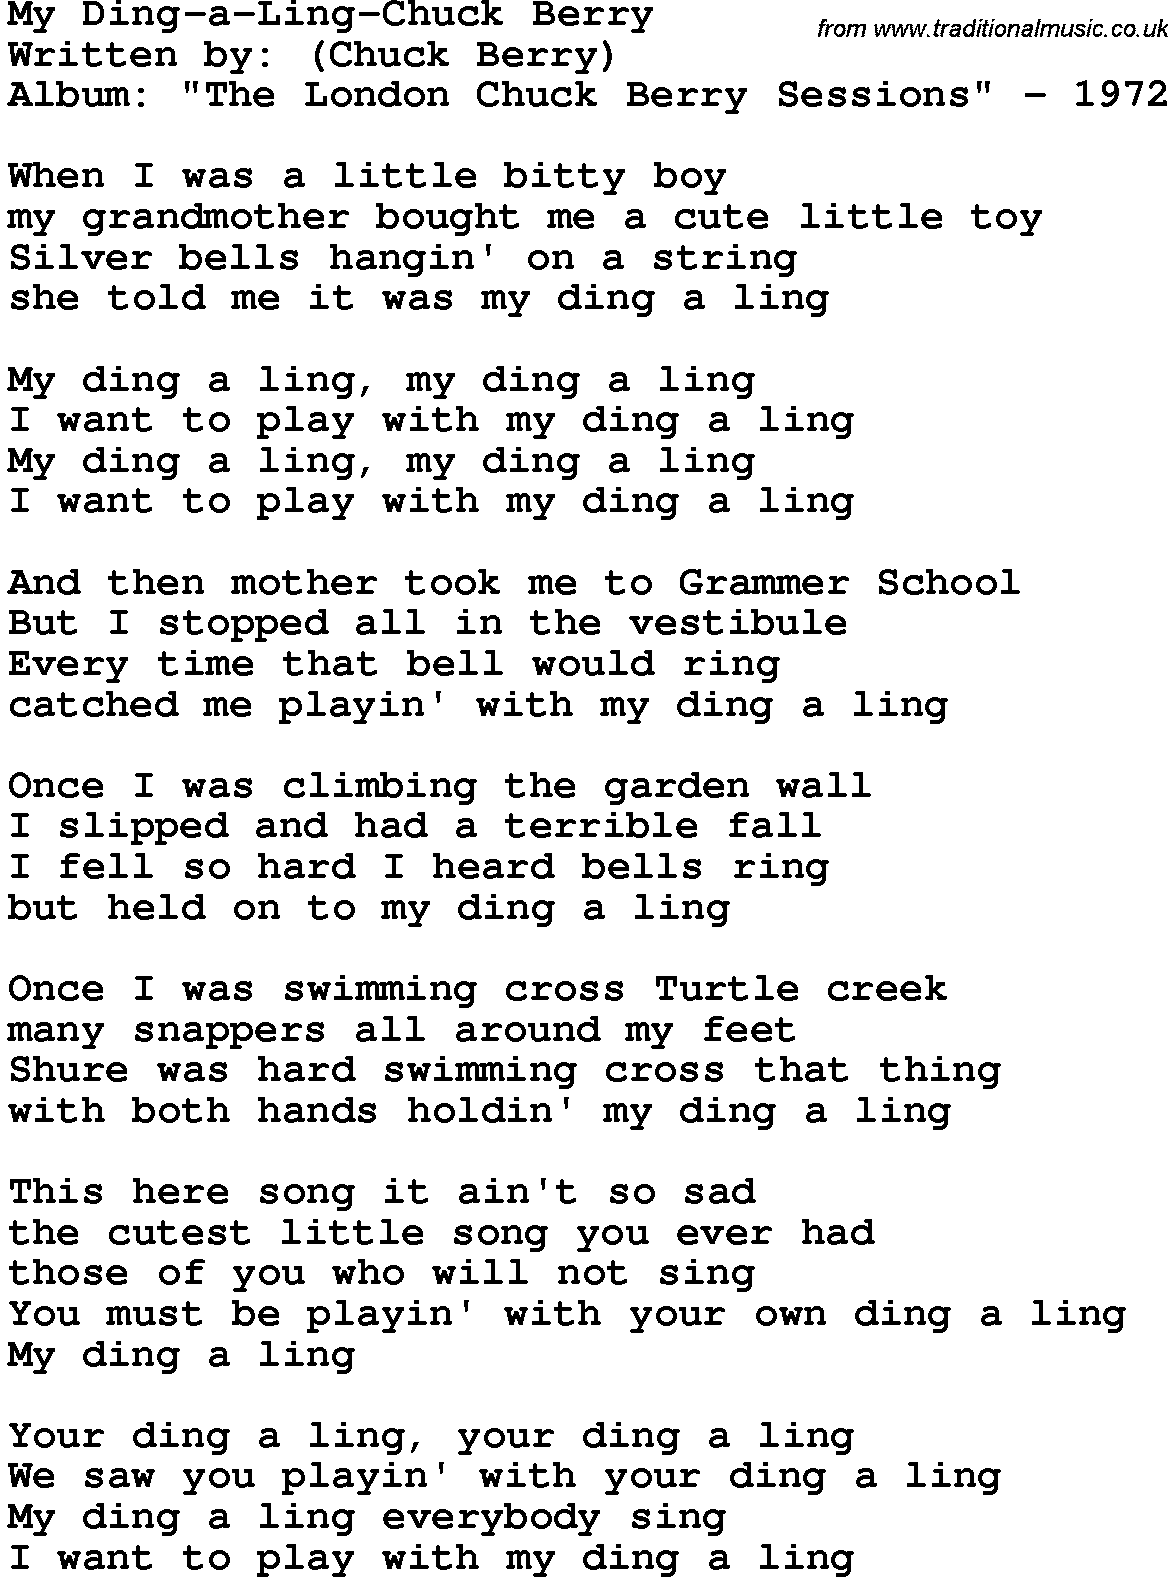 Novelty song: My Ding-A-Ling-Chuck Berry lyrics